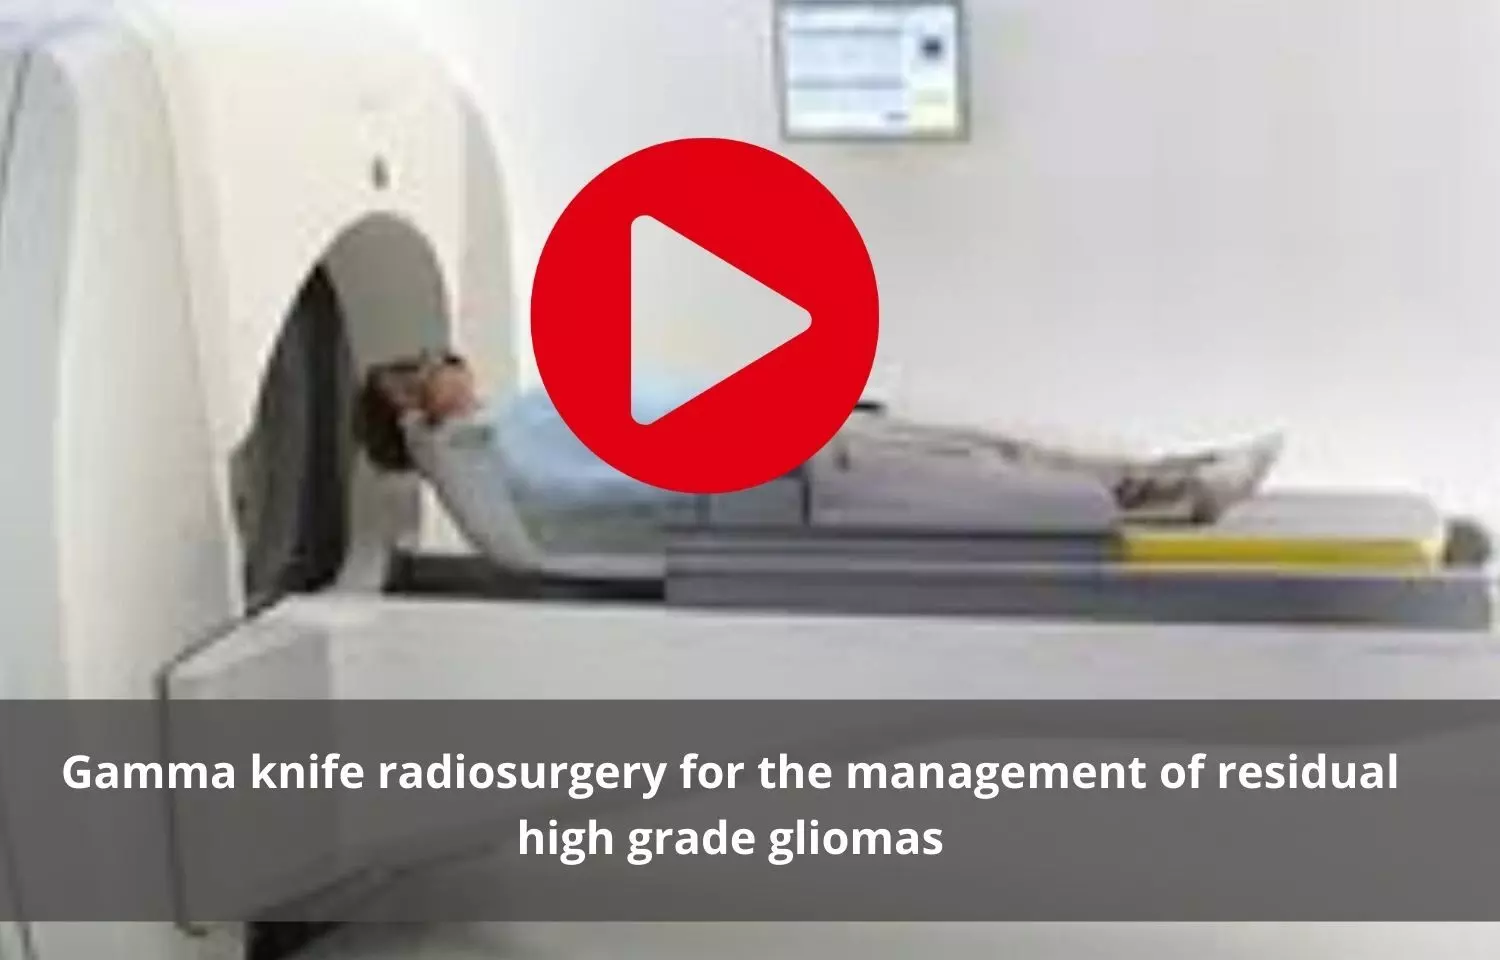 Gamma knife radiosurgery to manage high grade gliomas